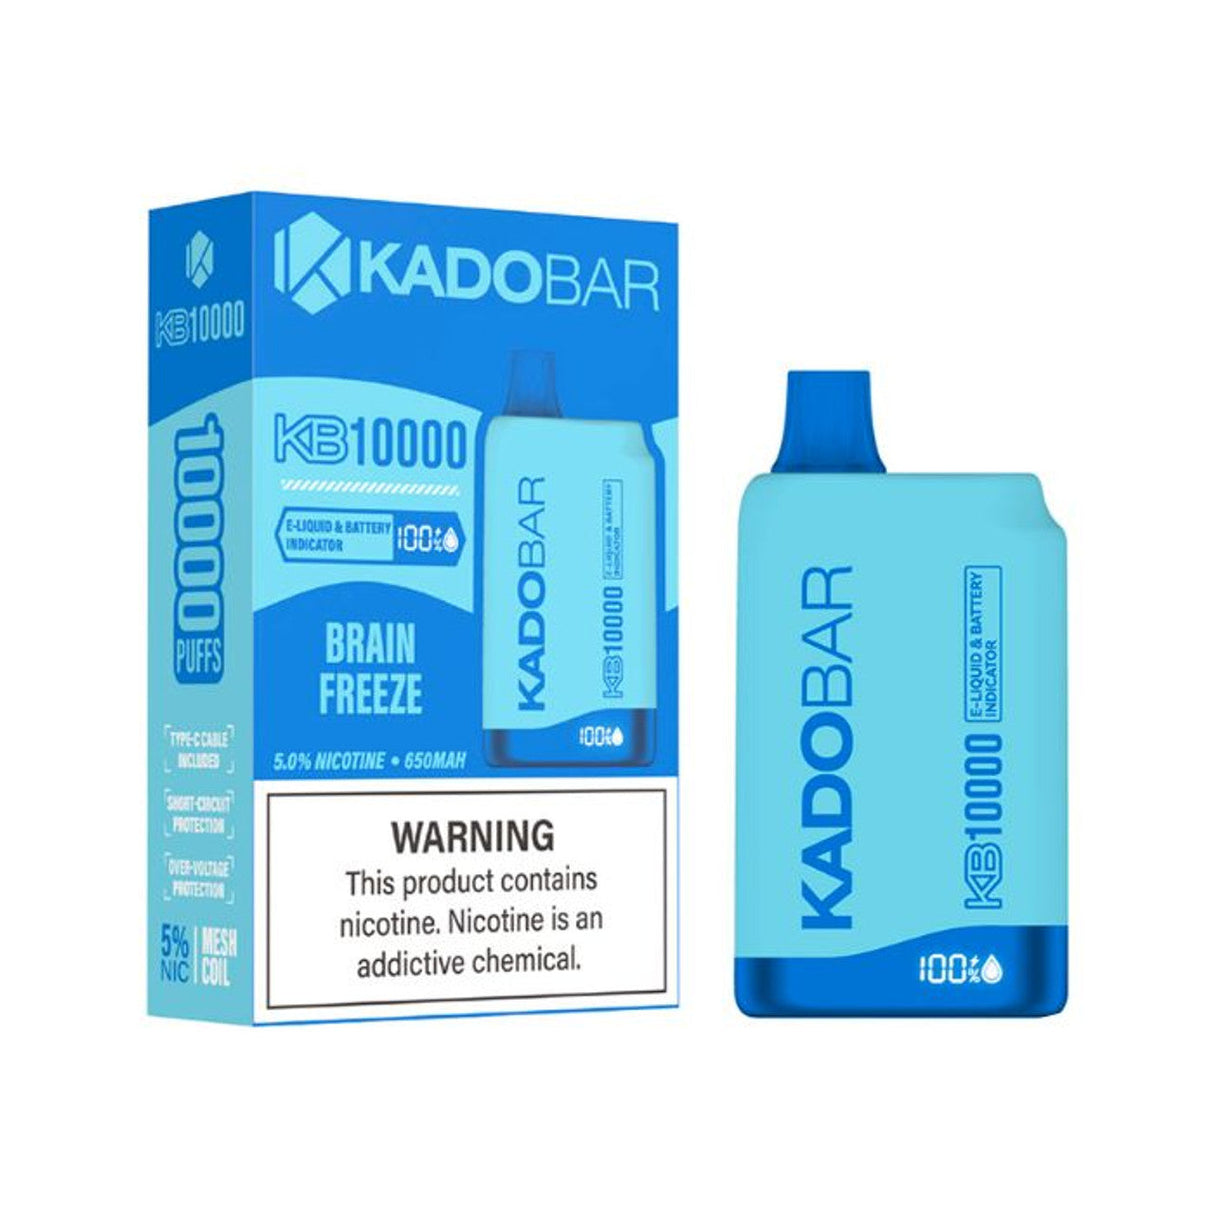 Brain Freeze - Kado Bar KB10000